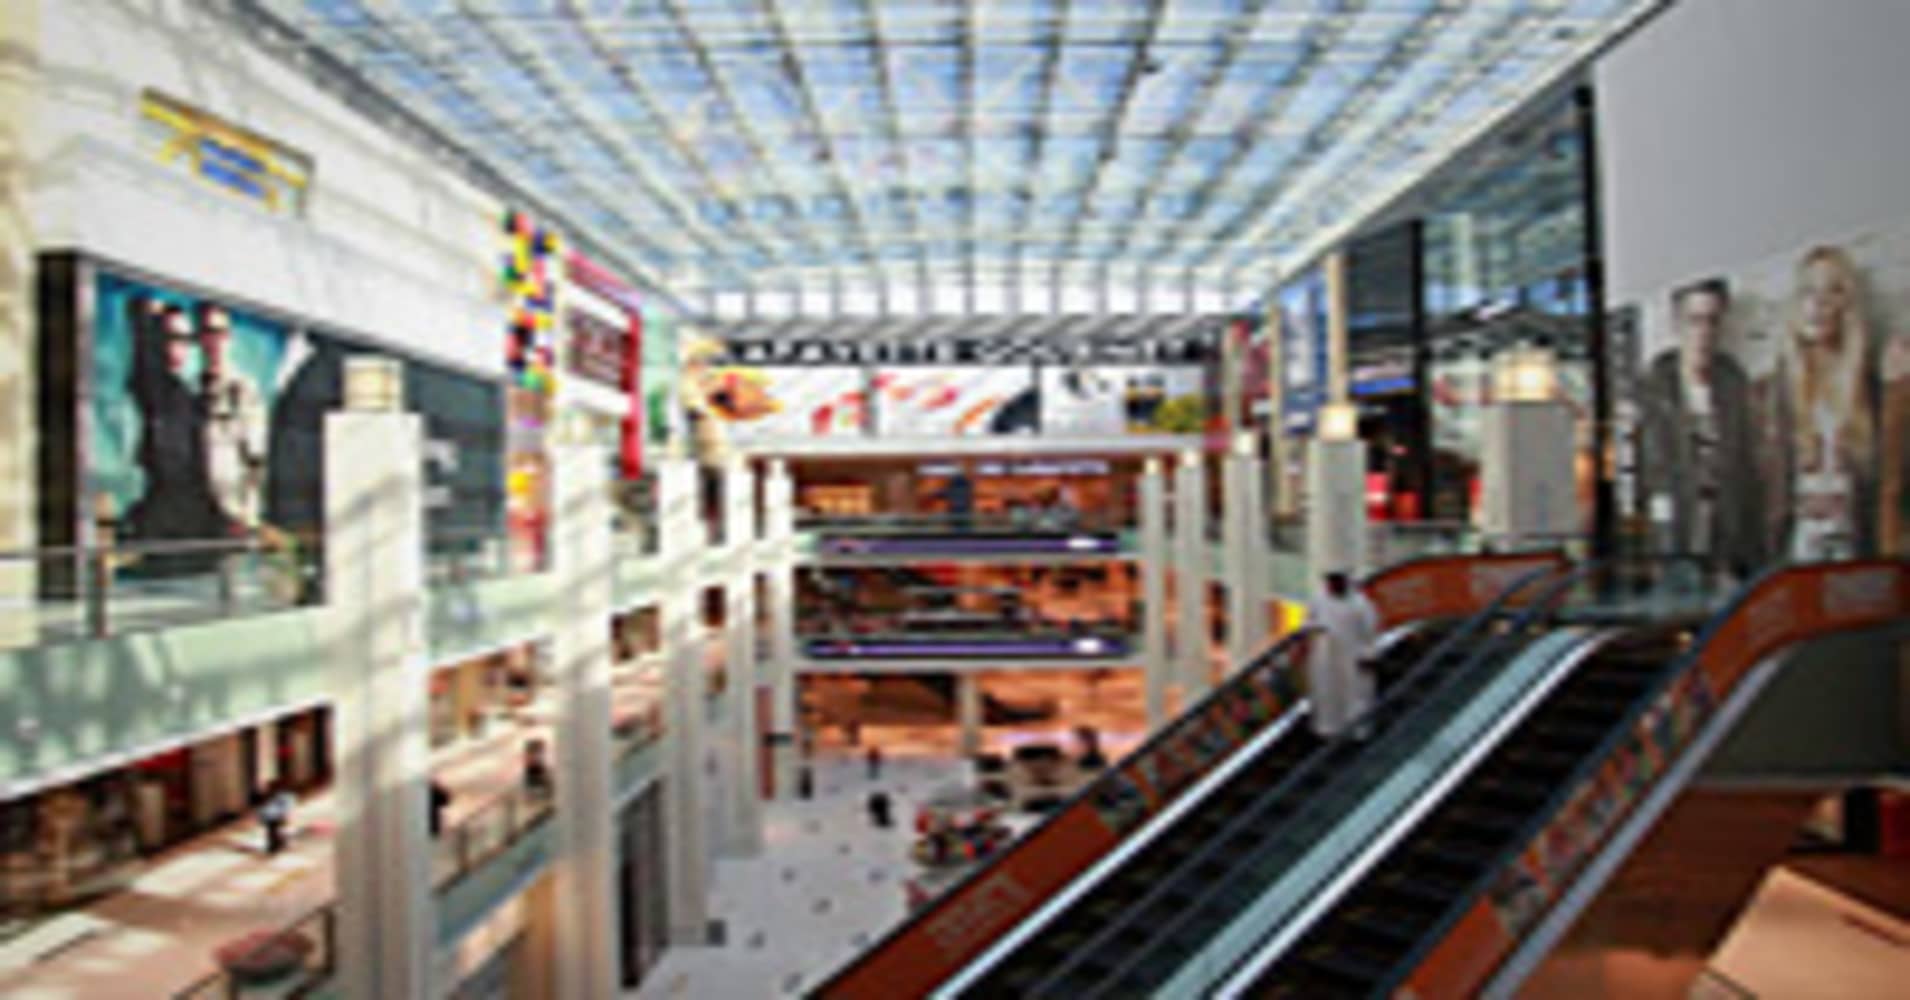 Stores are seen surrounding an atrium inside the Dubai Mall.